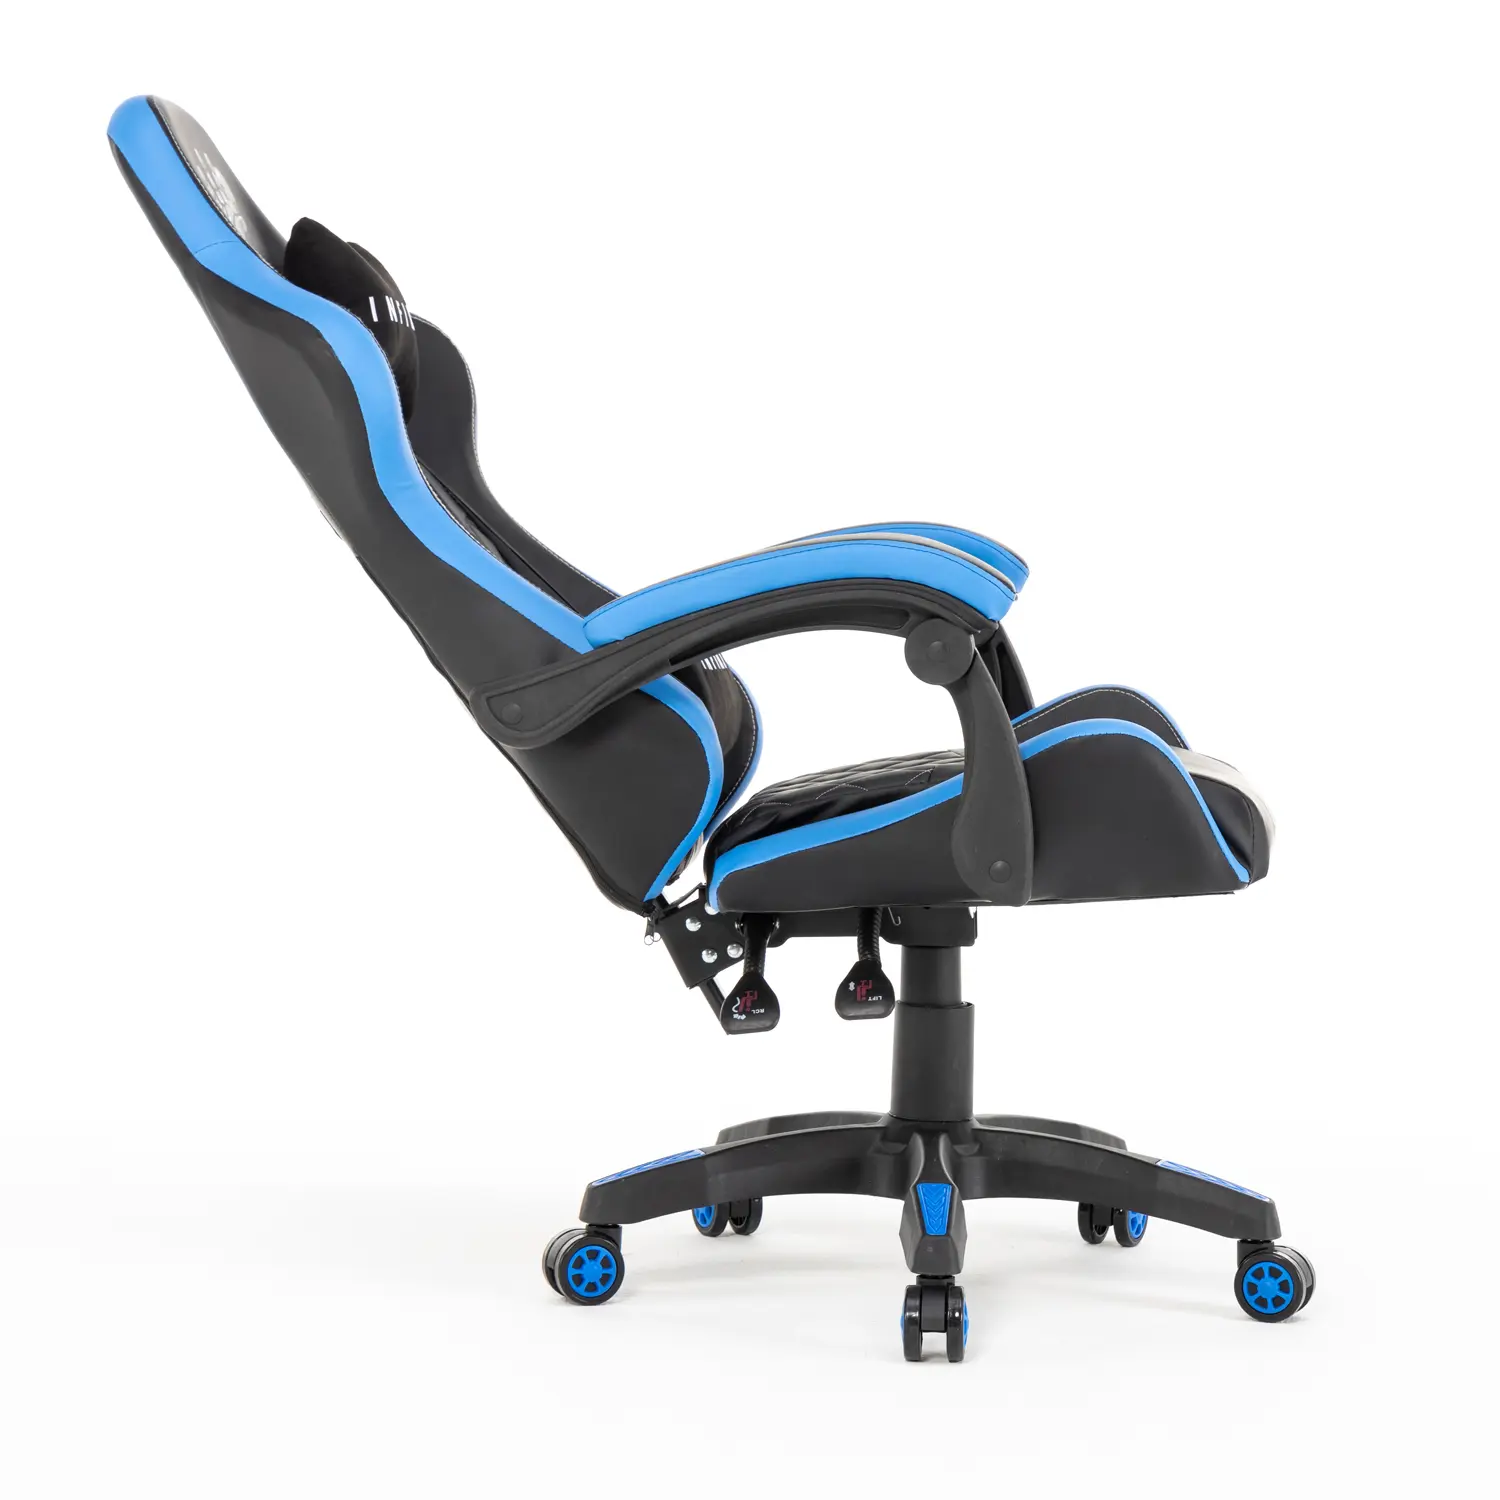 Gamer szék, forgószék fekete-kék (INFINI-FIVE-BLACK-BLUE)